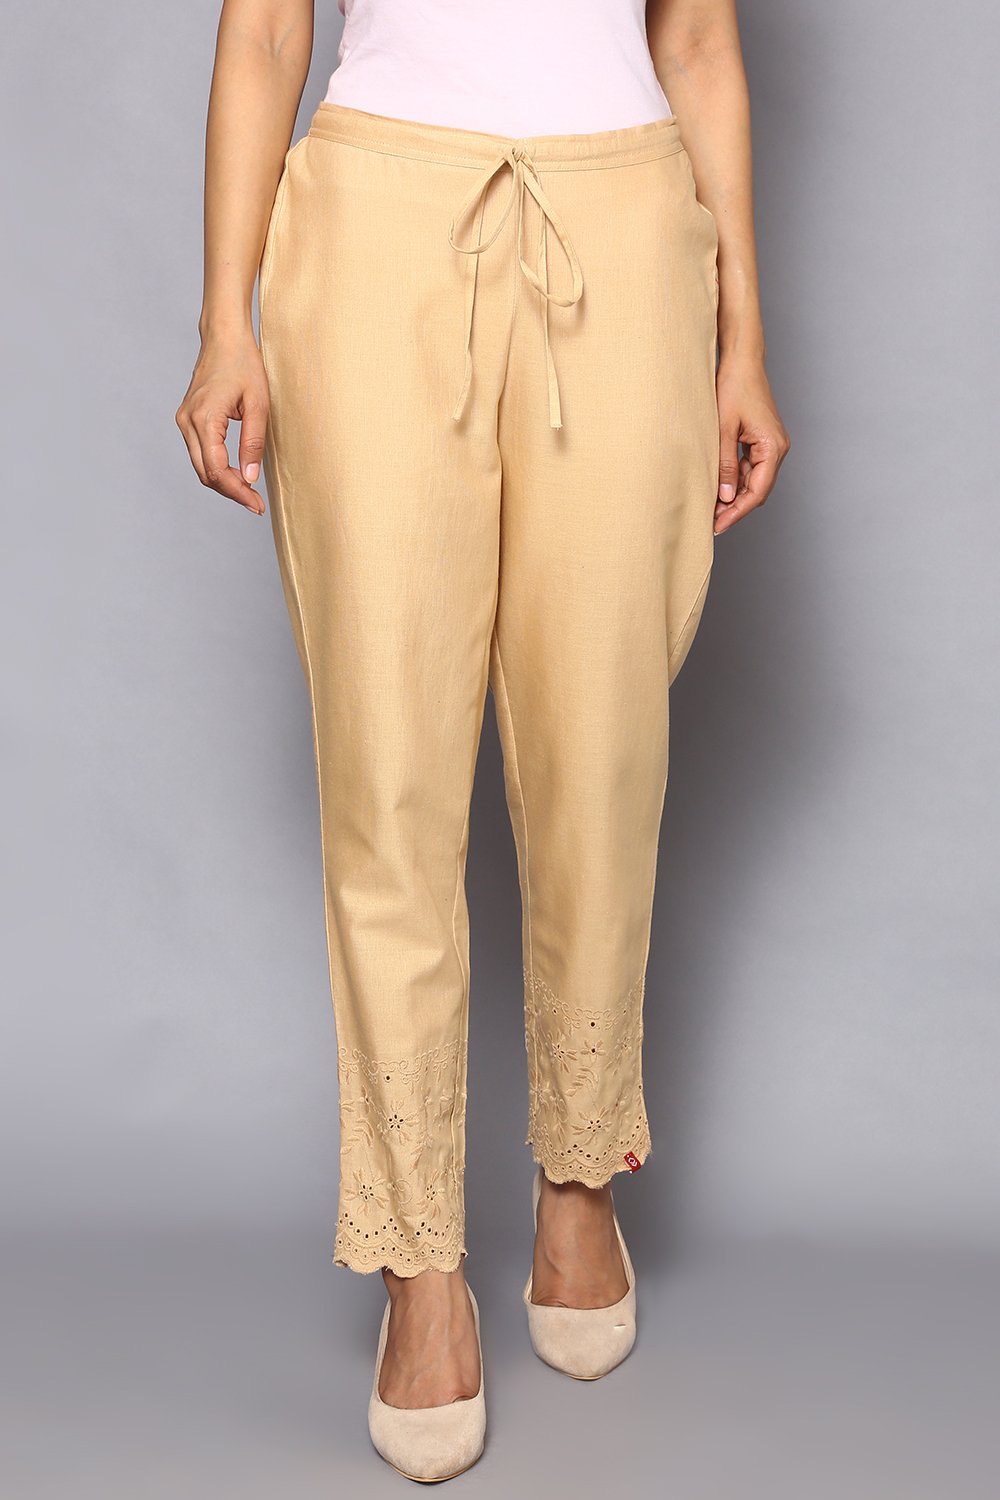 Prana Women's Kelly Knicker Relaxed Fit Mudd Brown Capri Pants Size 10 NWOT